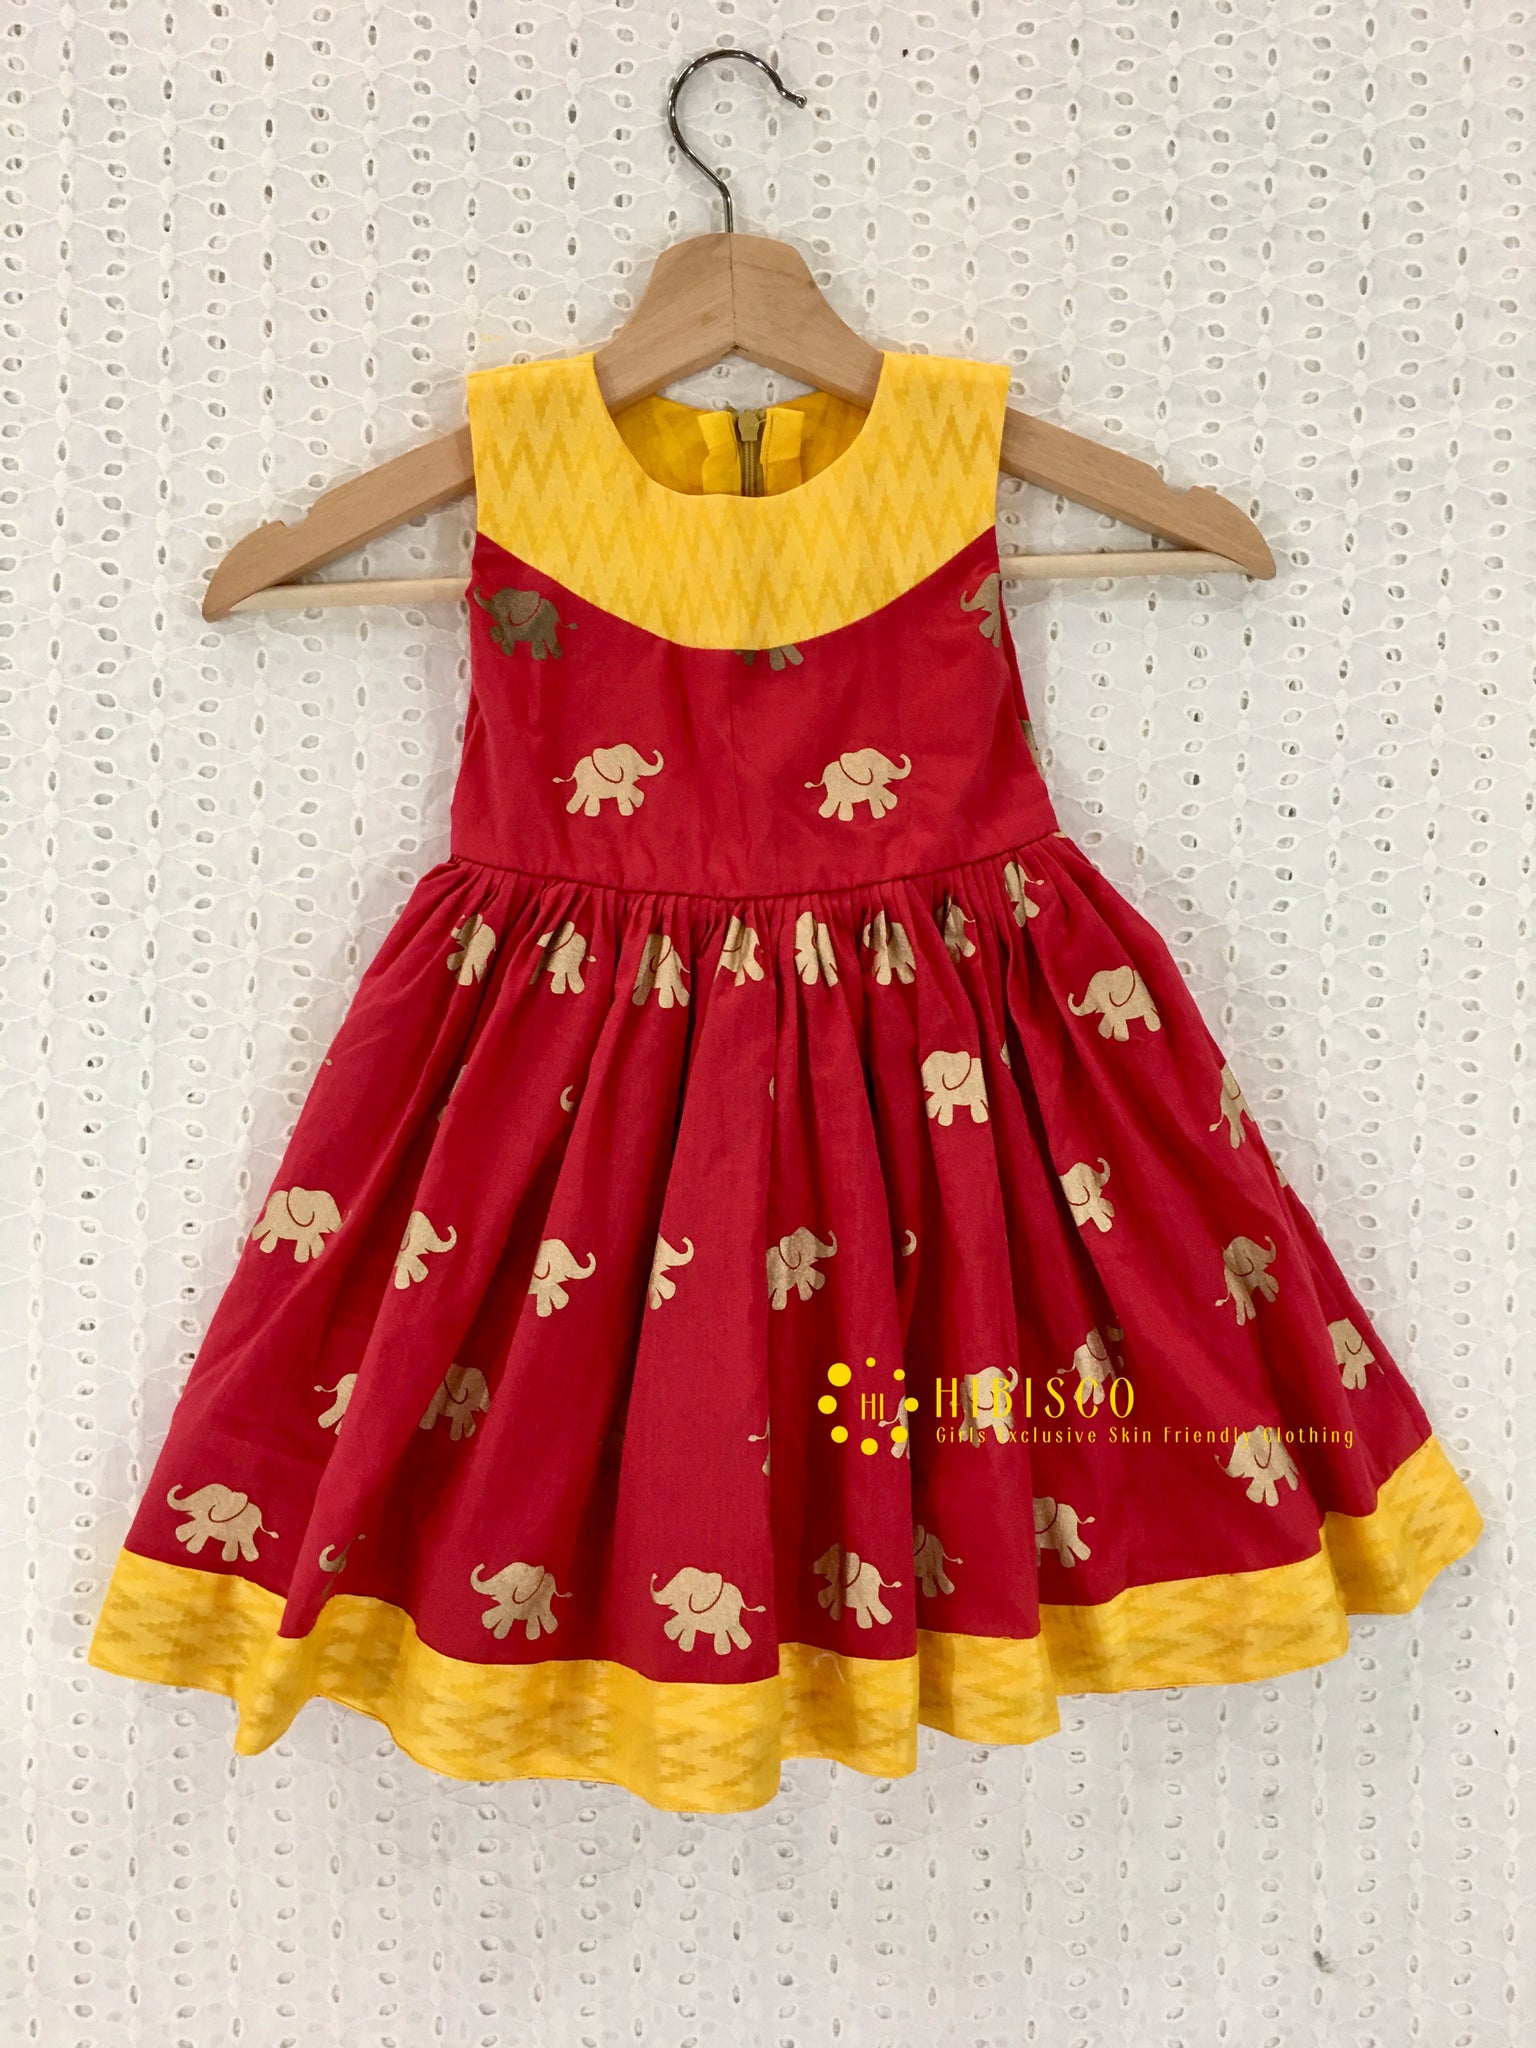 Buy Sagun Dresses Girls Yellow Floral ALine Frock 45 YrsKids  WearGirls FrockKids Party WearClothing AccessoriesBaby GirlsDresses Frock Online at Best Prices in India  JioMart